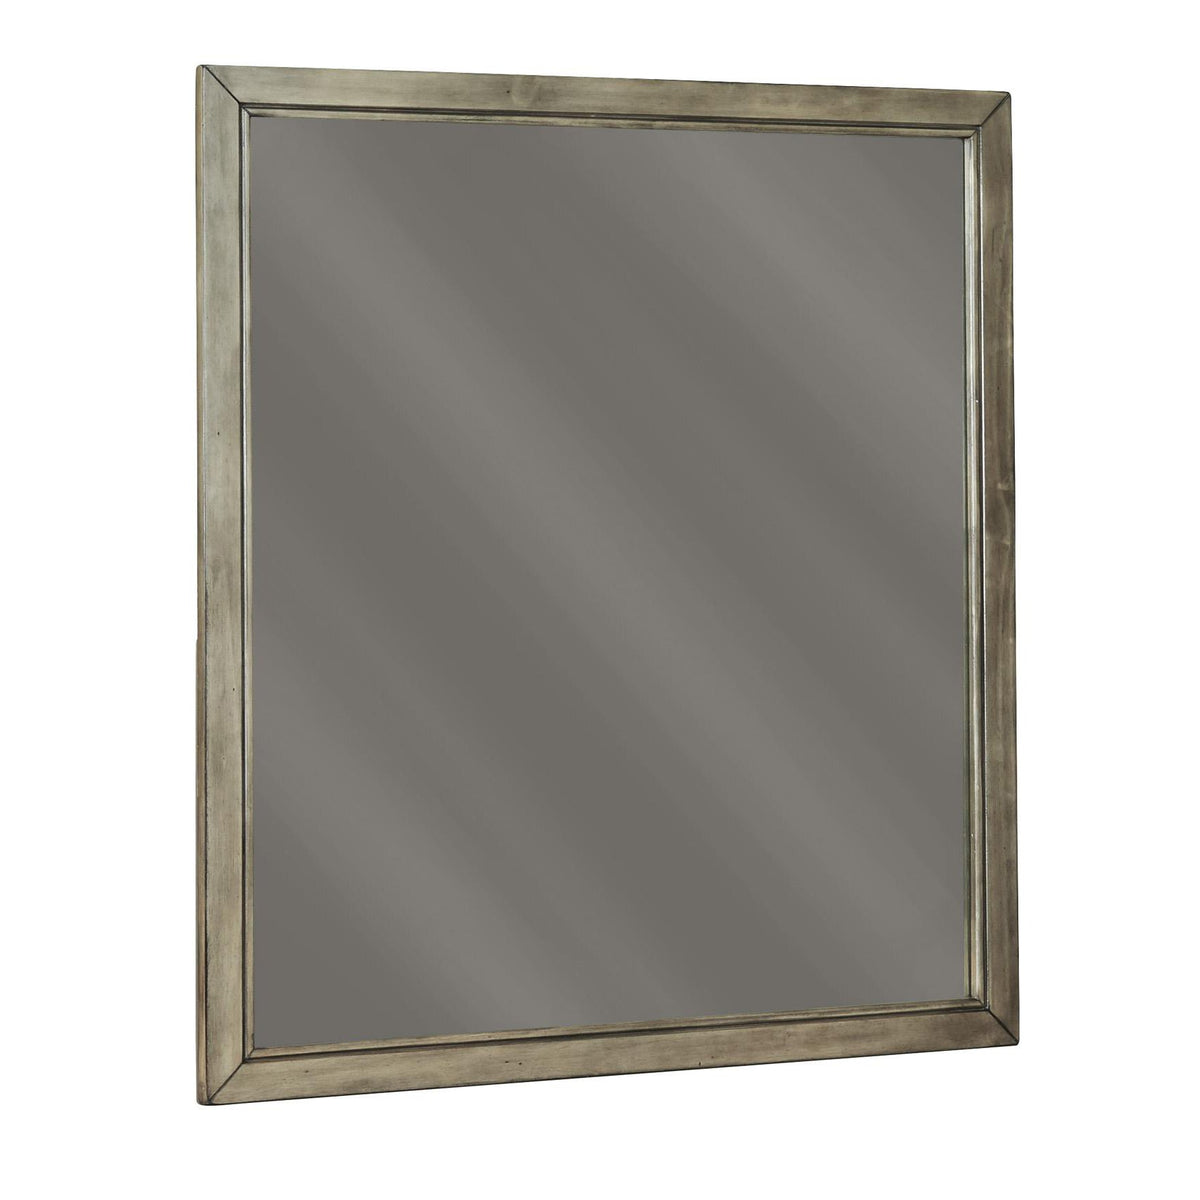 Contemporary Style Rectangular Top Bedroom Mirror in Gray - BM209348